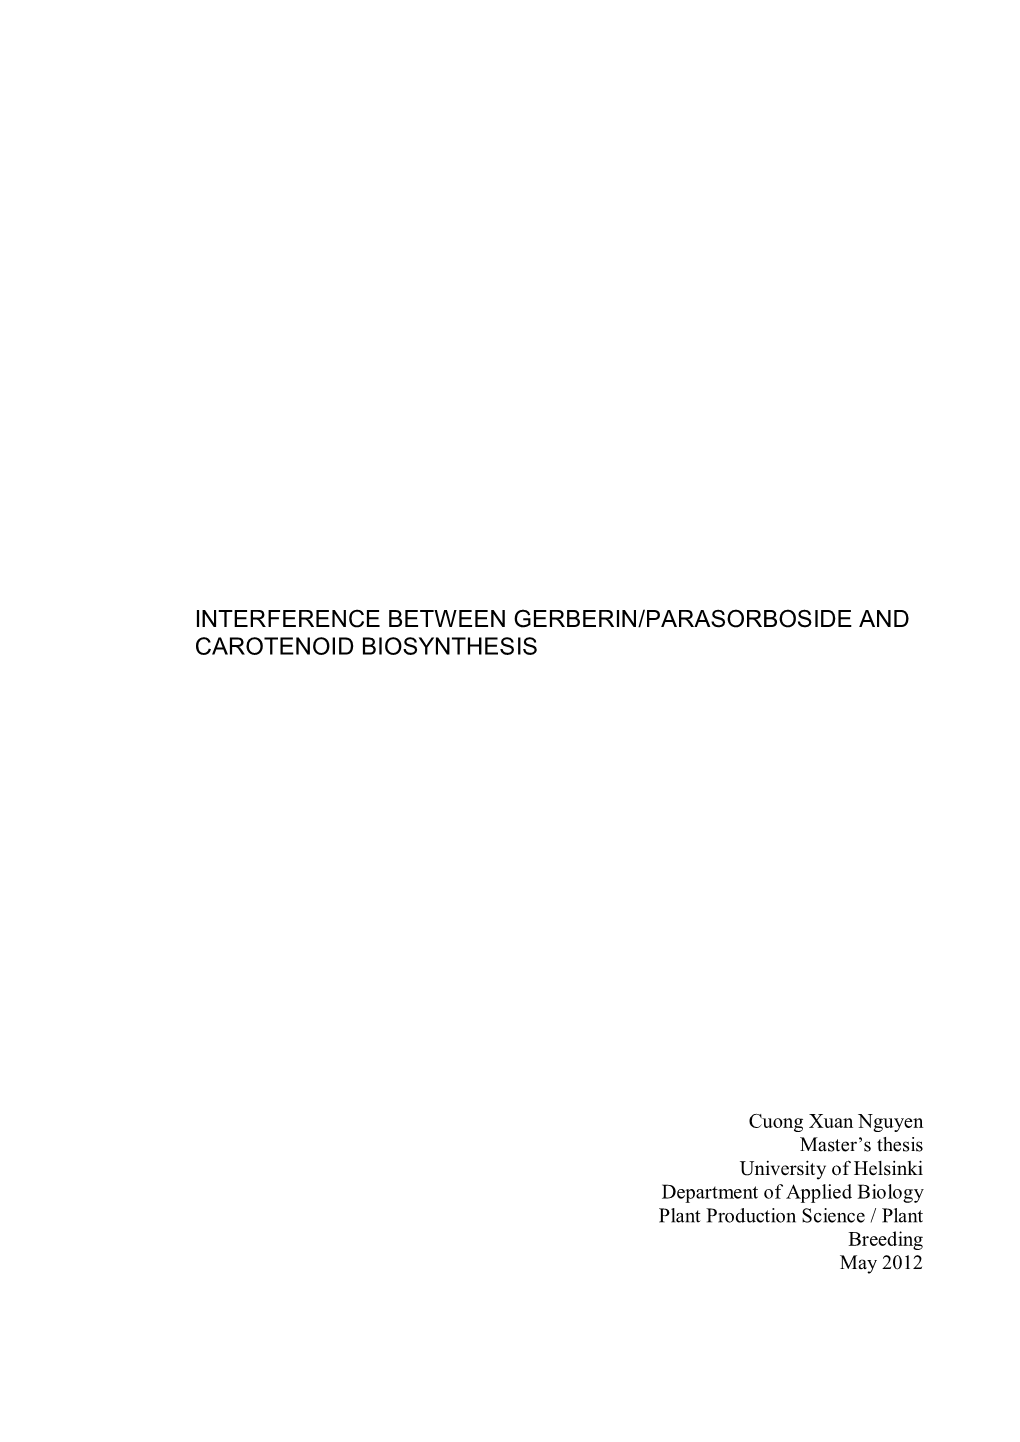 Interference Between Gerberin/Parasorboside and Carotenoid Biosynthesis